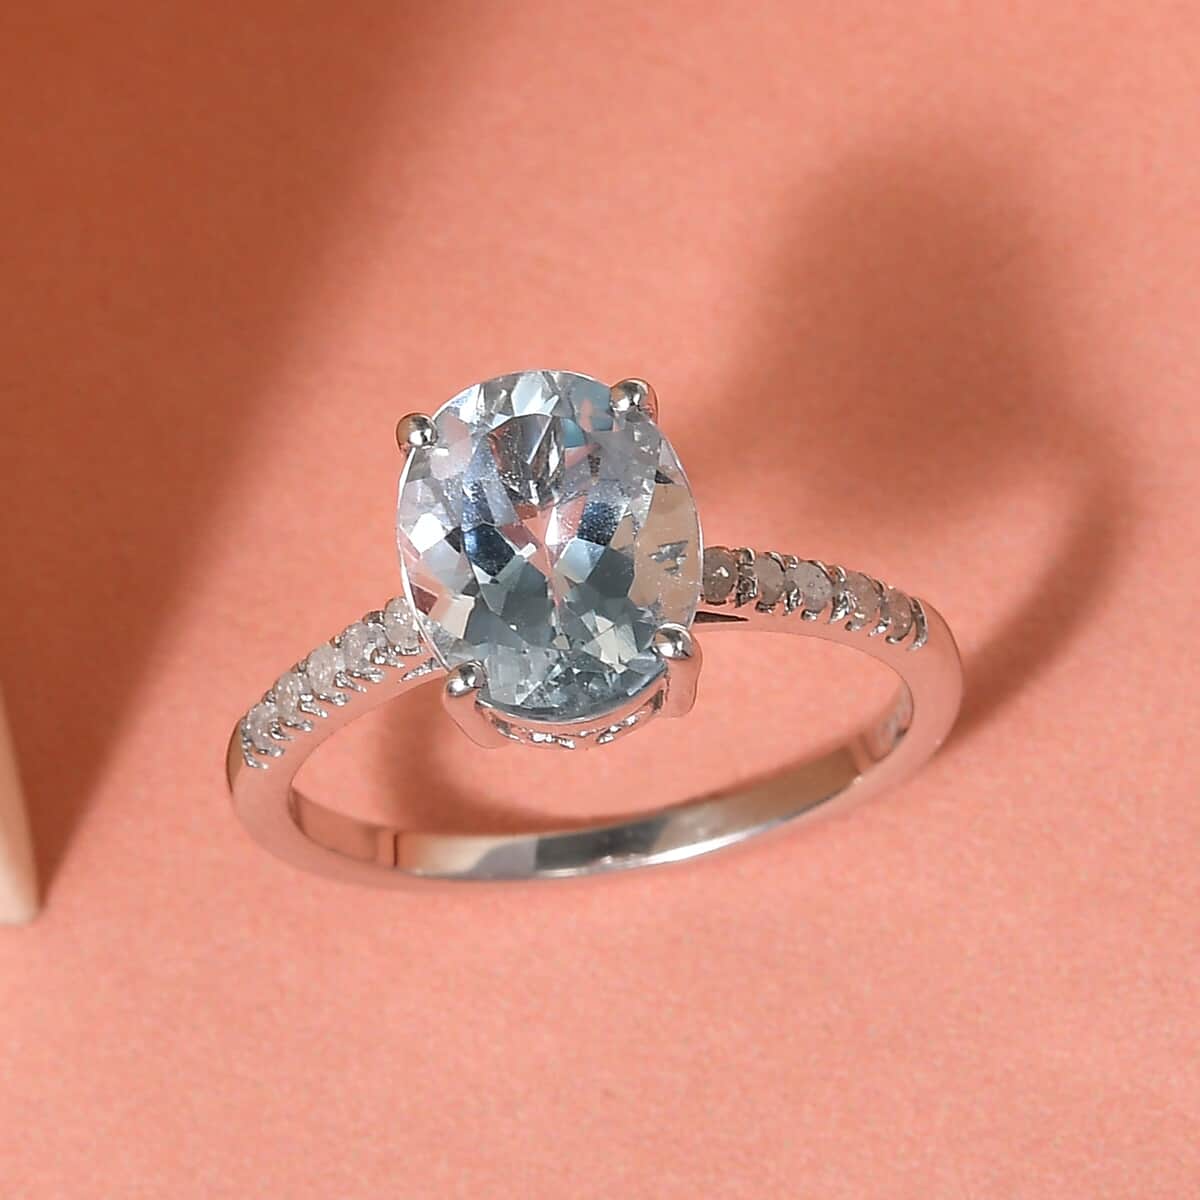 Premium Mangoro Aquamarine, Diamond (0.15 cts) Ring in Platinum Over Sterling Silver (Size 10.0) 2.40 ctw image number 1